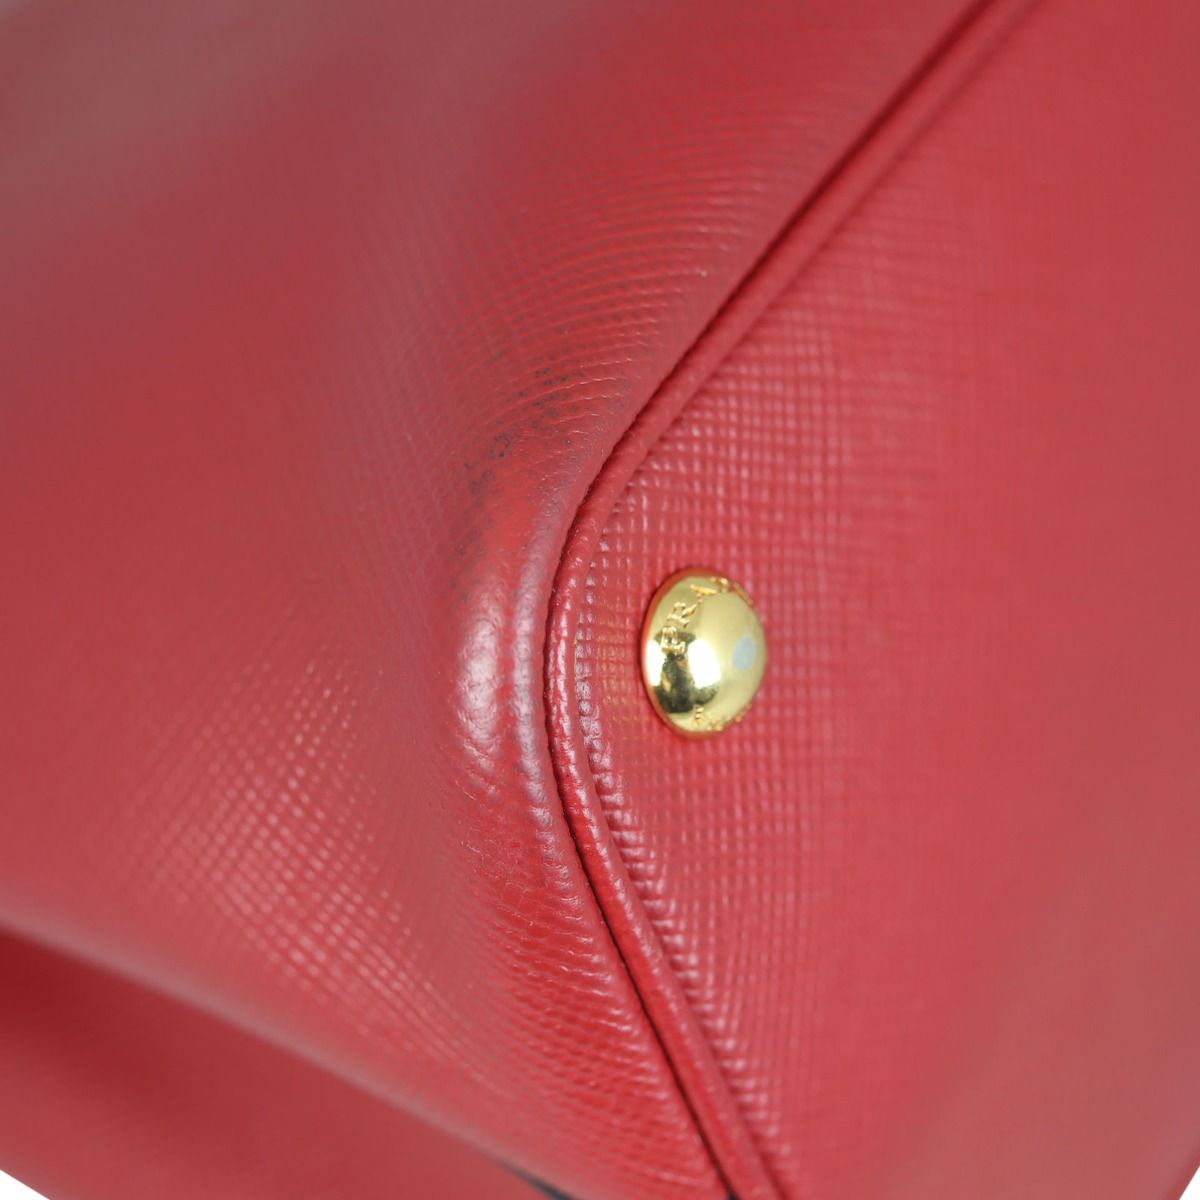 Sydney's Fashion Diary: Review: Prada Cuir Medium Double Bag in Marmo